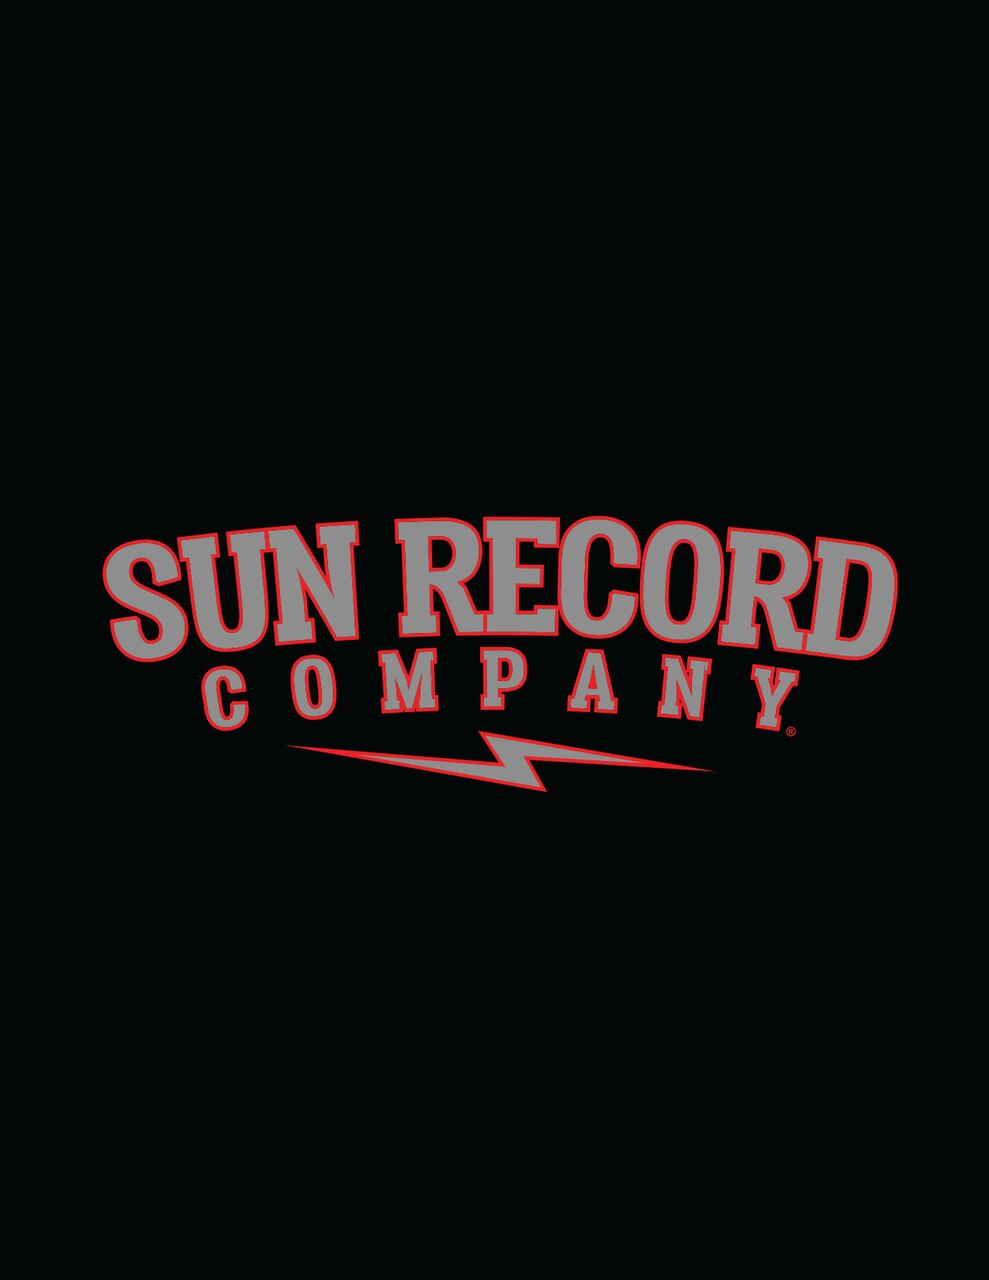 Girl-Shirt Steady - Sun Records That Rockabilly Sound